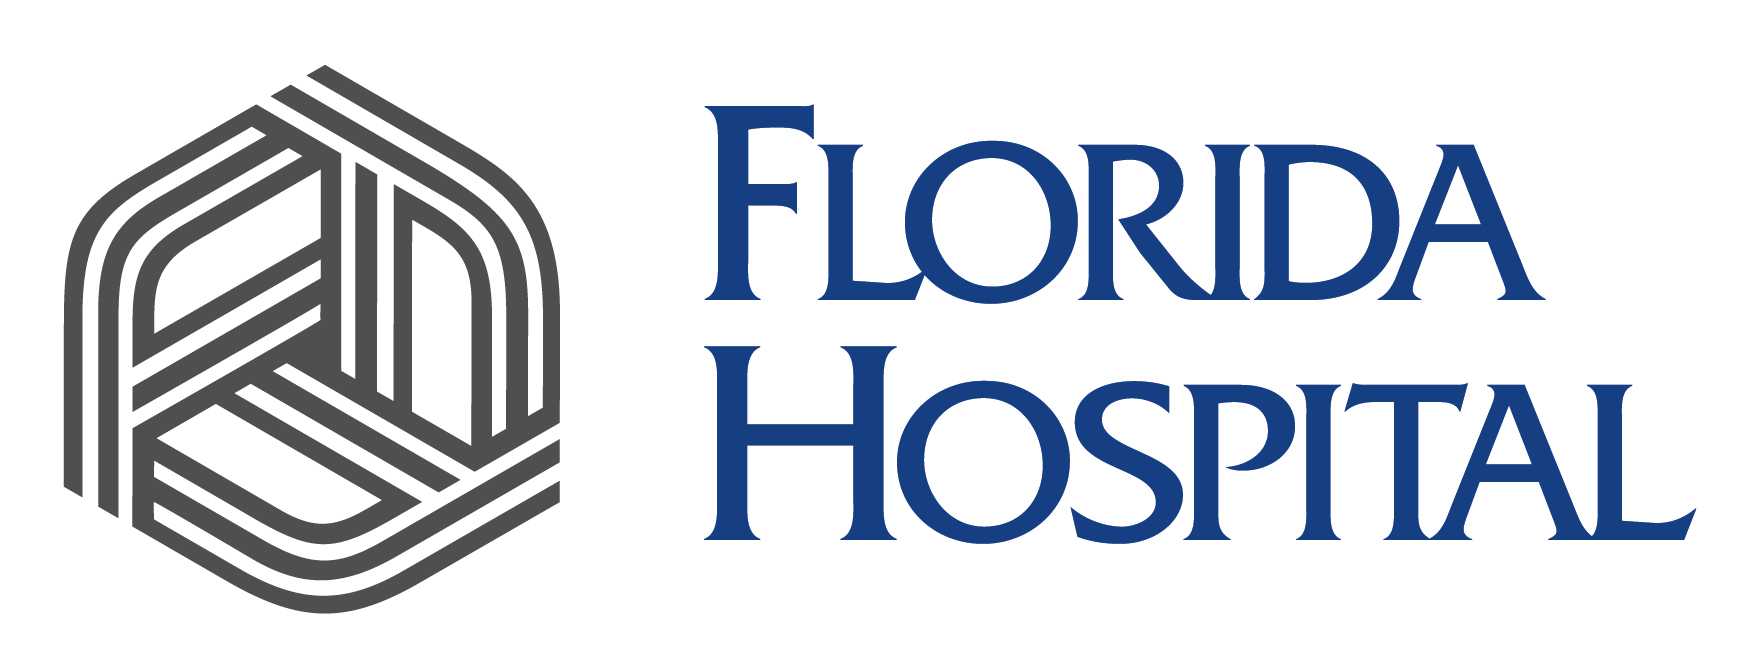 florida hospital